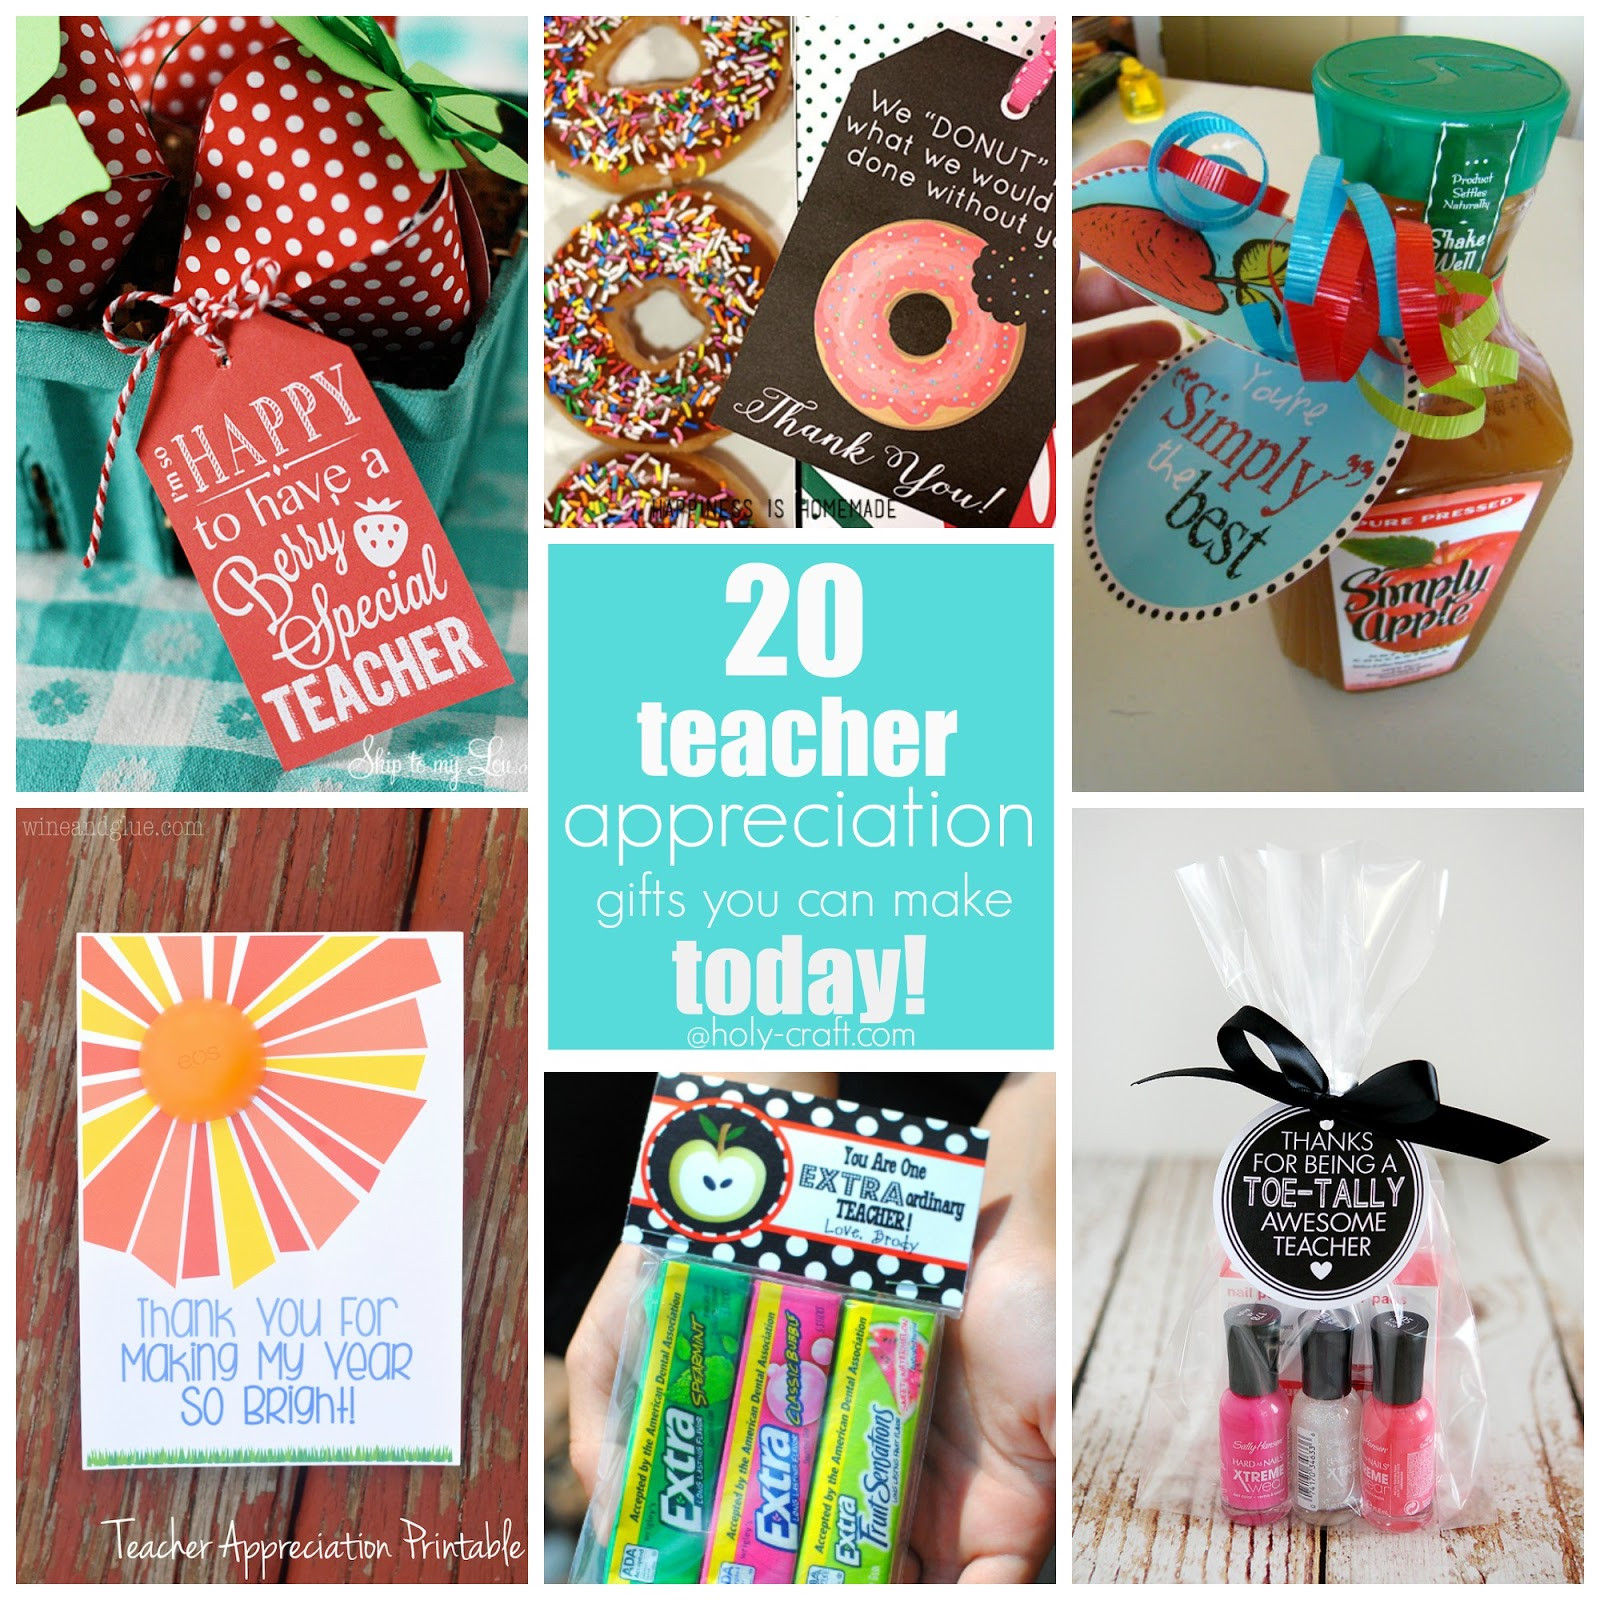 Teacher Valentine Gift Ideas
 20 Teacher appreciation ts you can make today Rachel